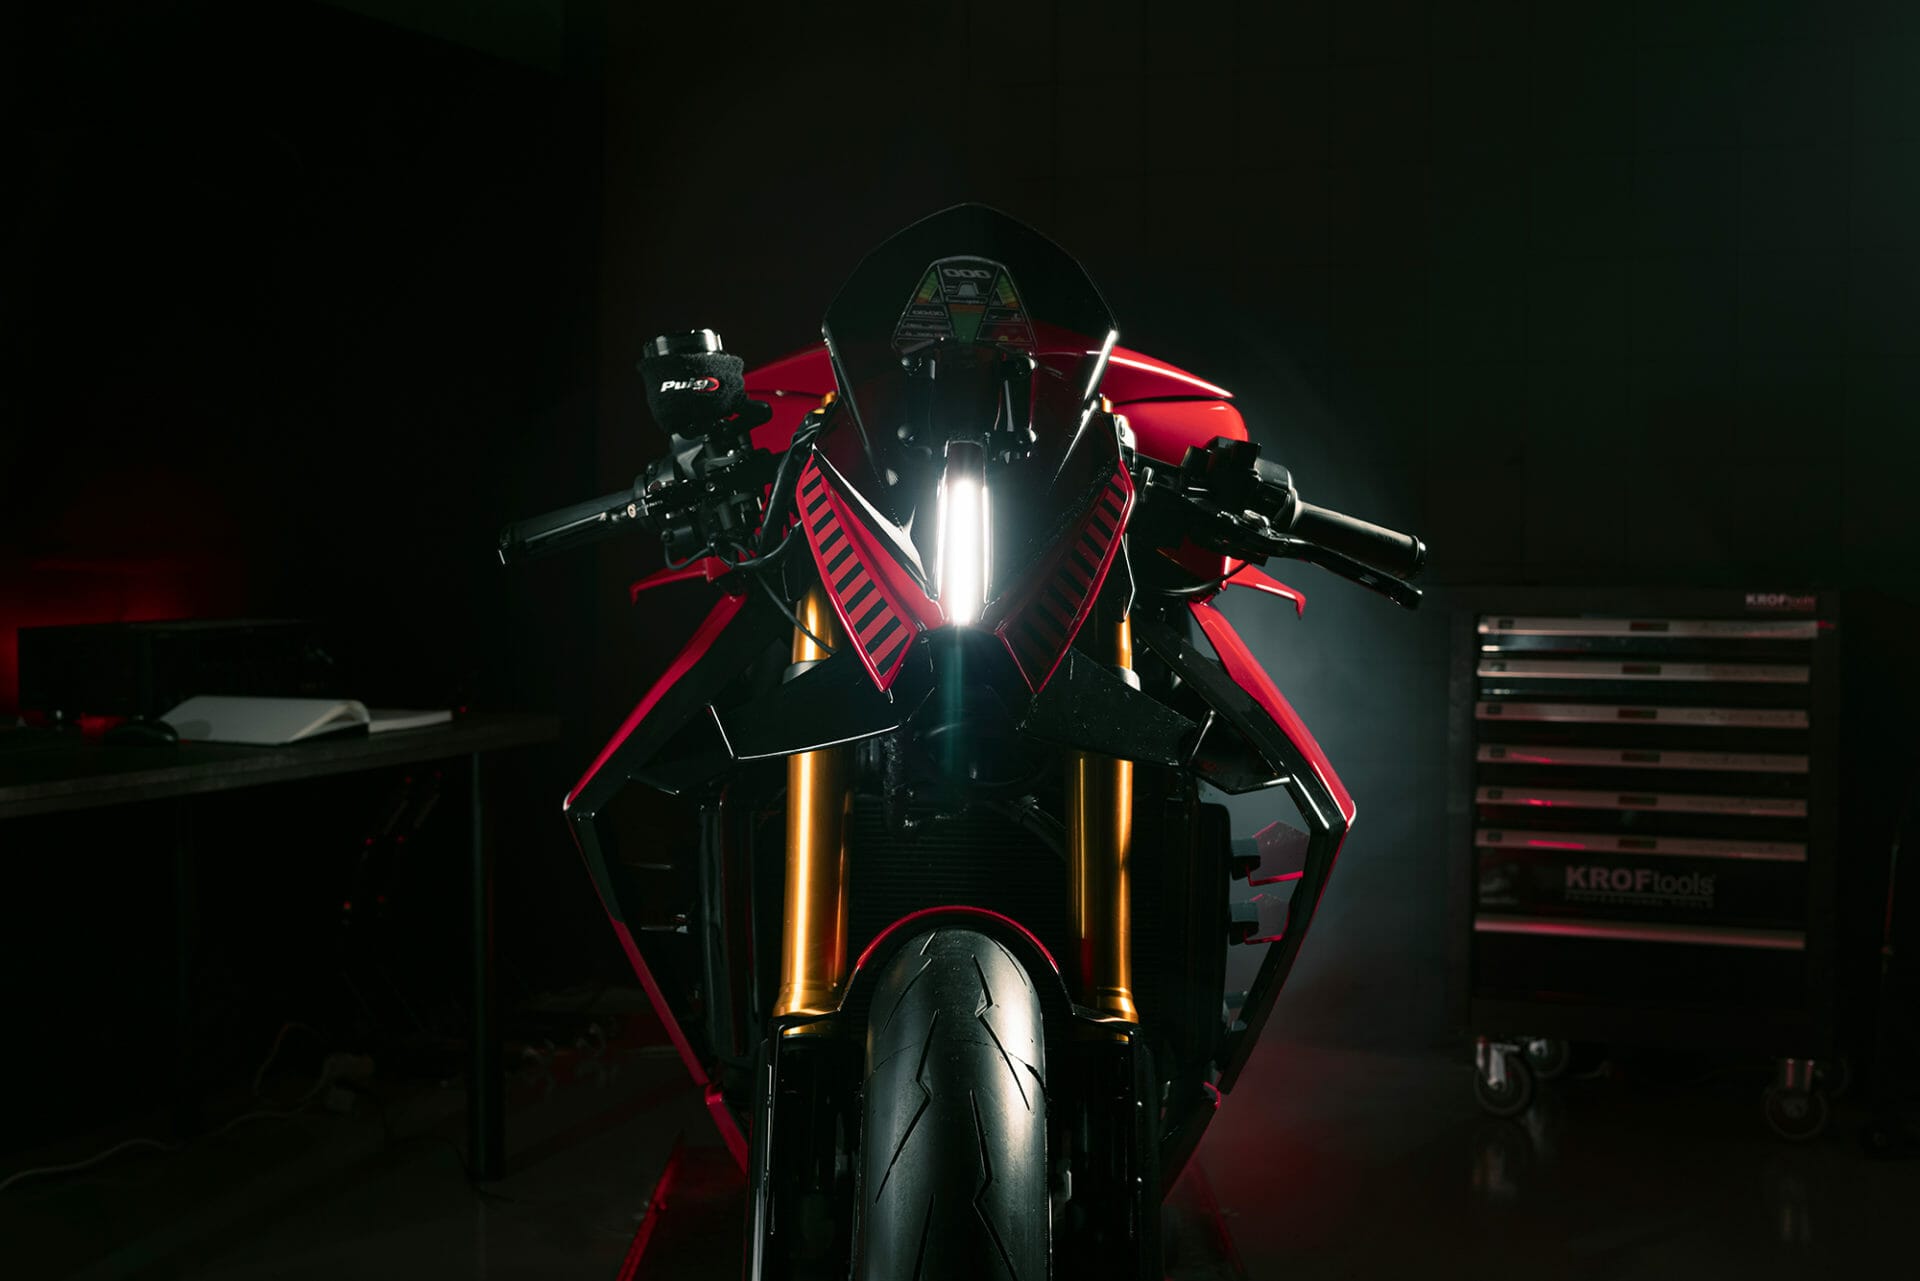 Puig transforms naked bike into futuristic superbike - Puig Diablo
- MOTORCYCLES.NEWS